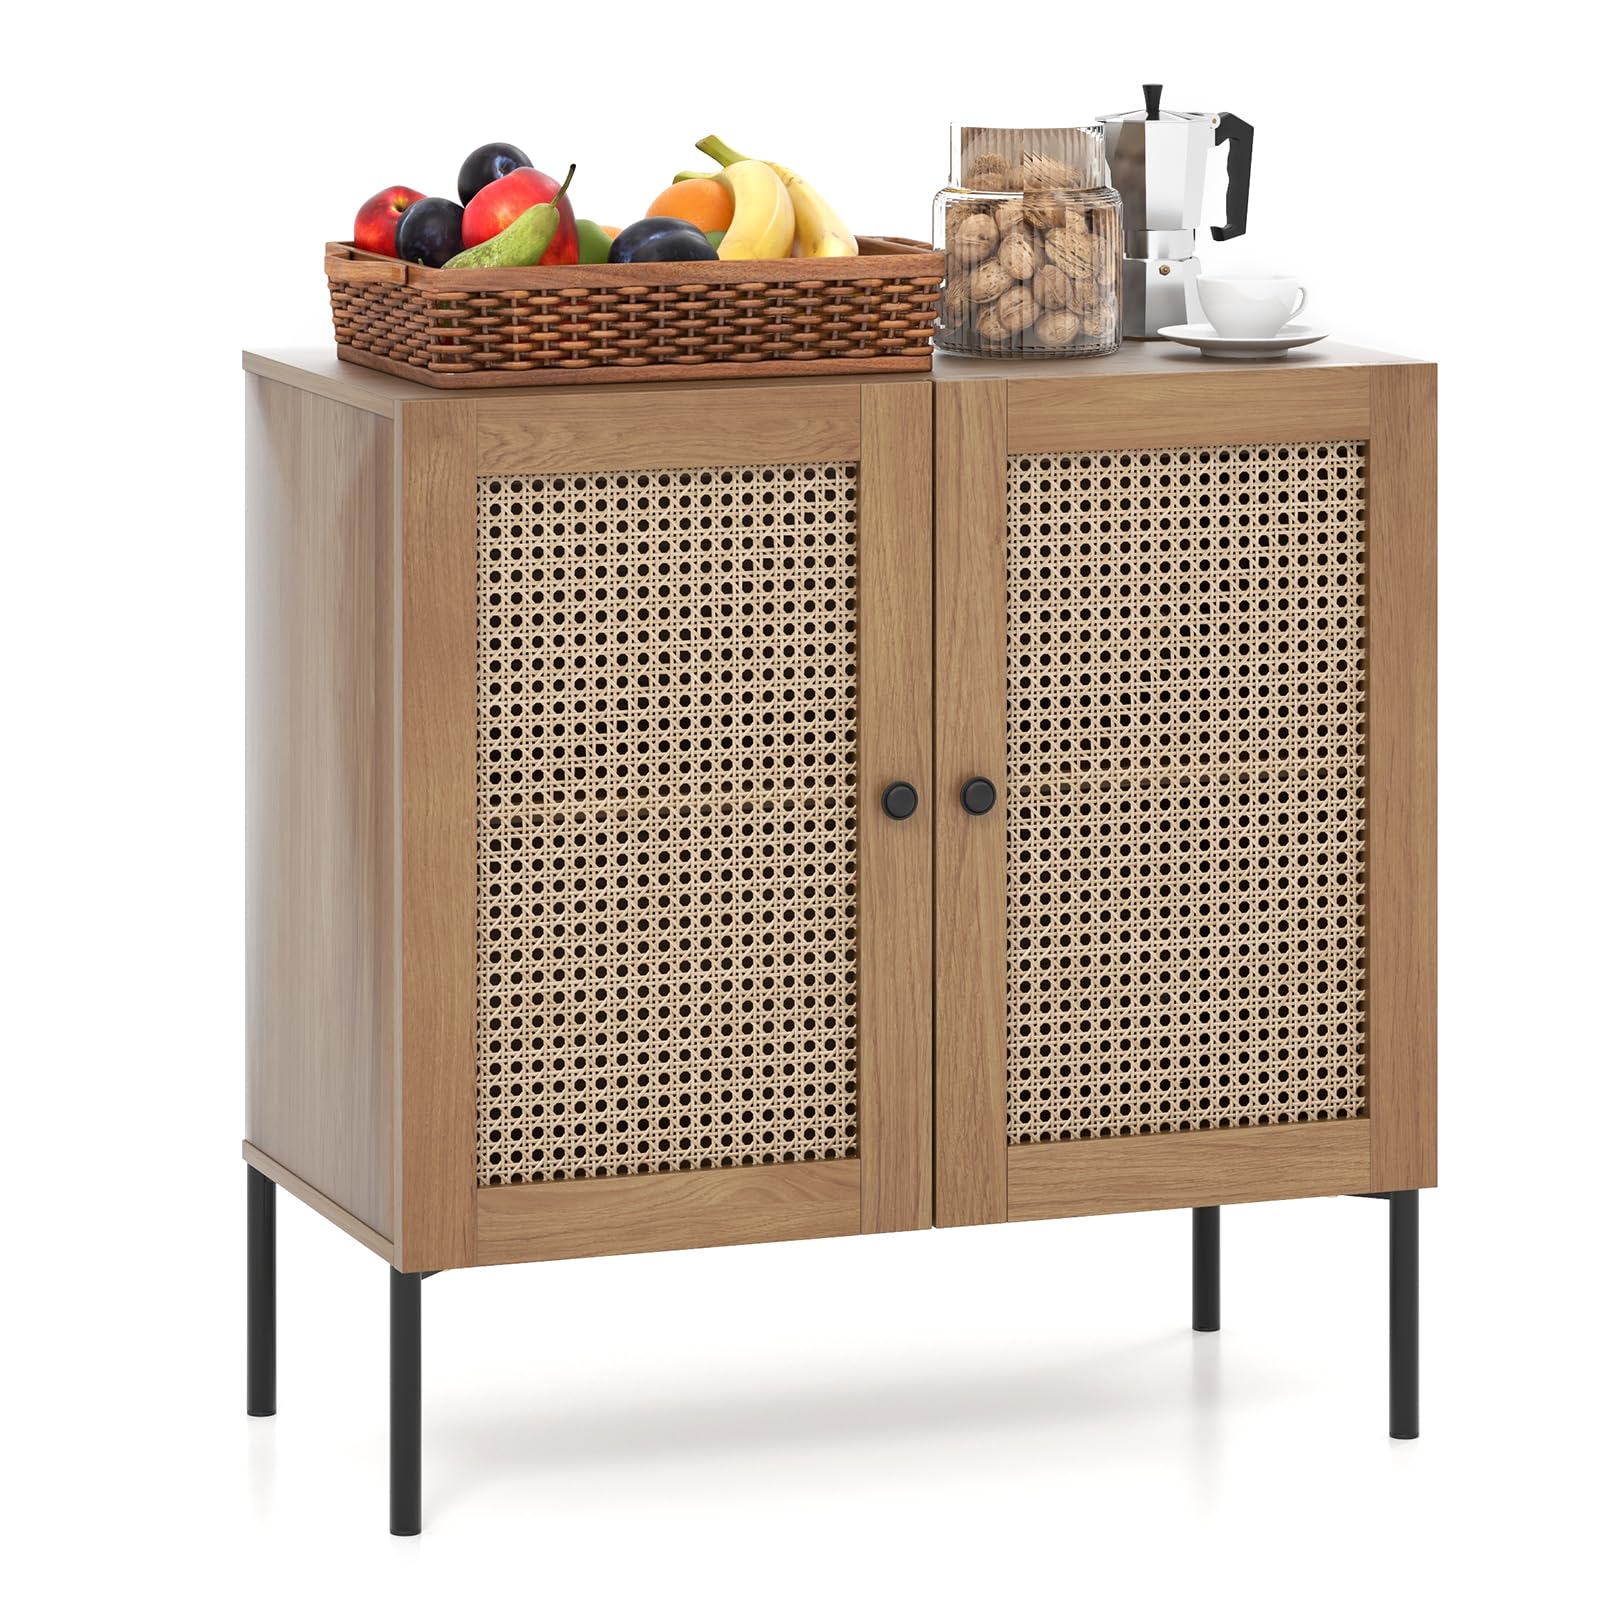 Giantex Buffet Cabinet, Wood Sideboard Storage Cabinet with Rattan Door, 3-Position Adjustable Shelf